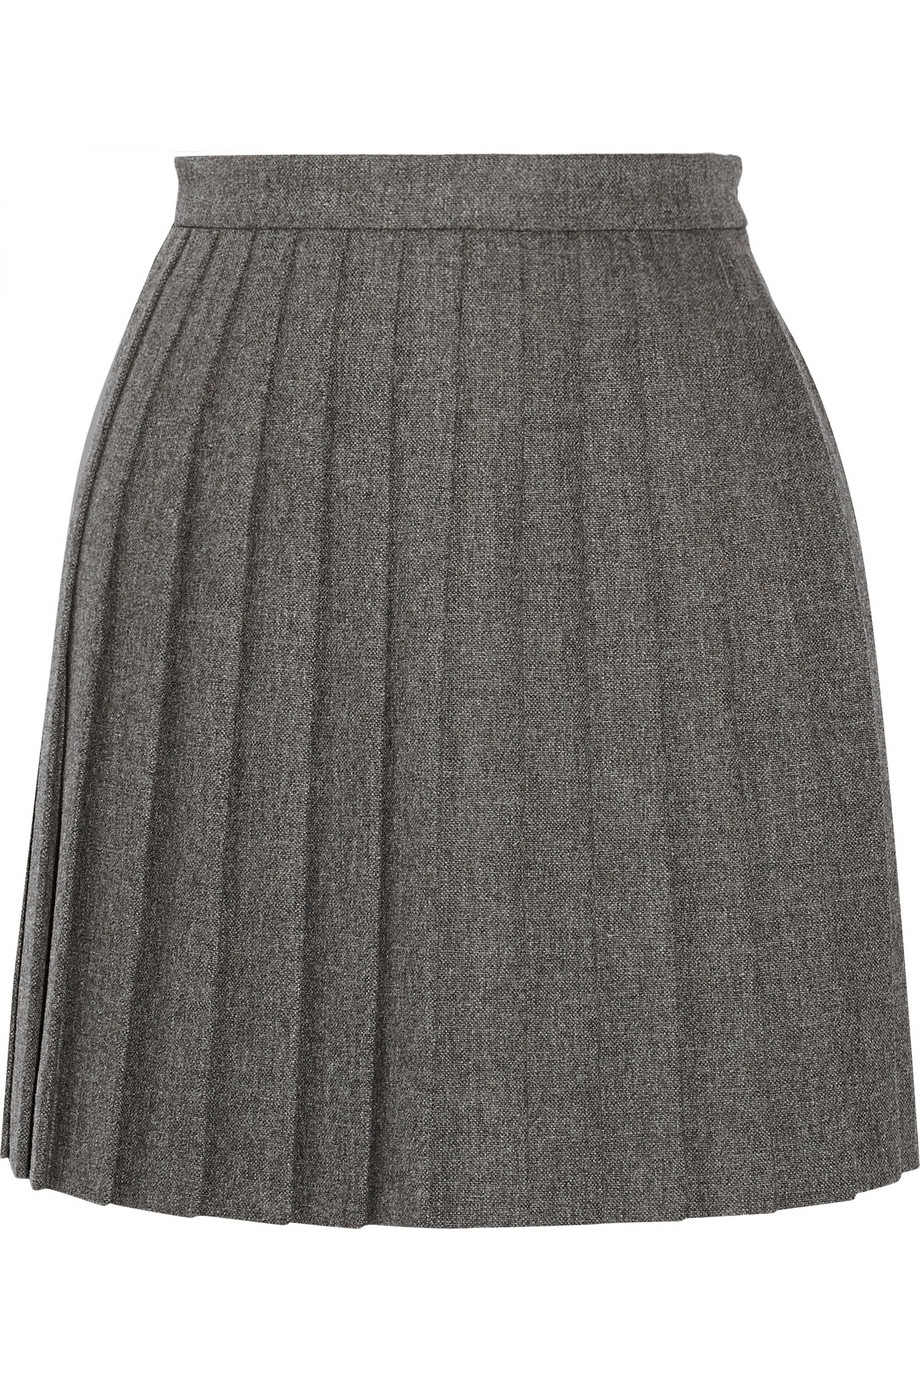 Saint laurent Pleated Wool Mini Skirt in Gray | Lyst